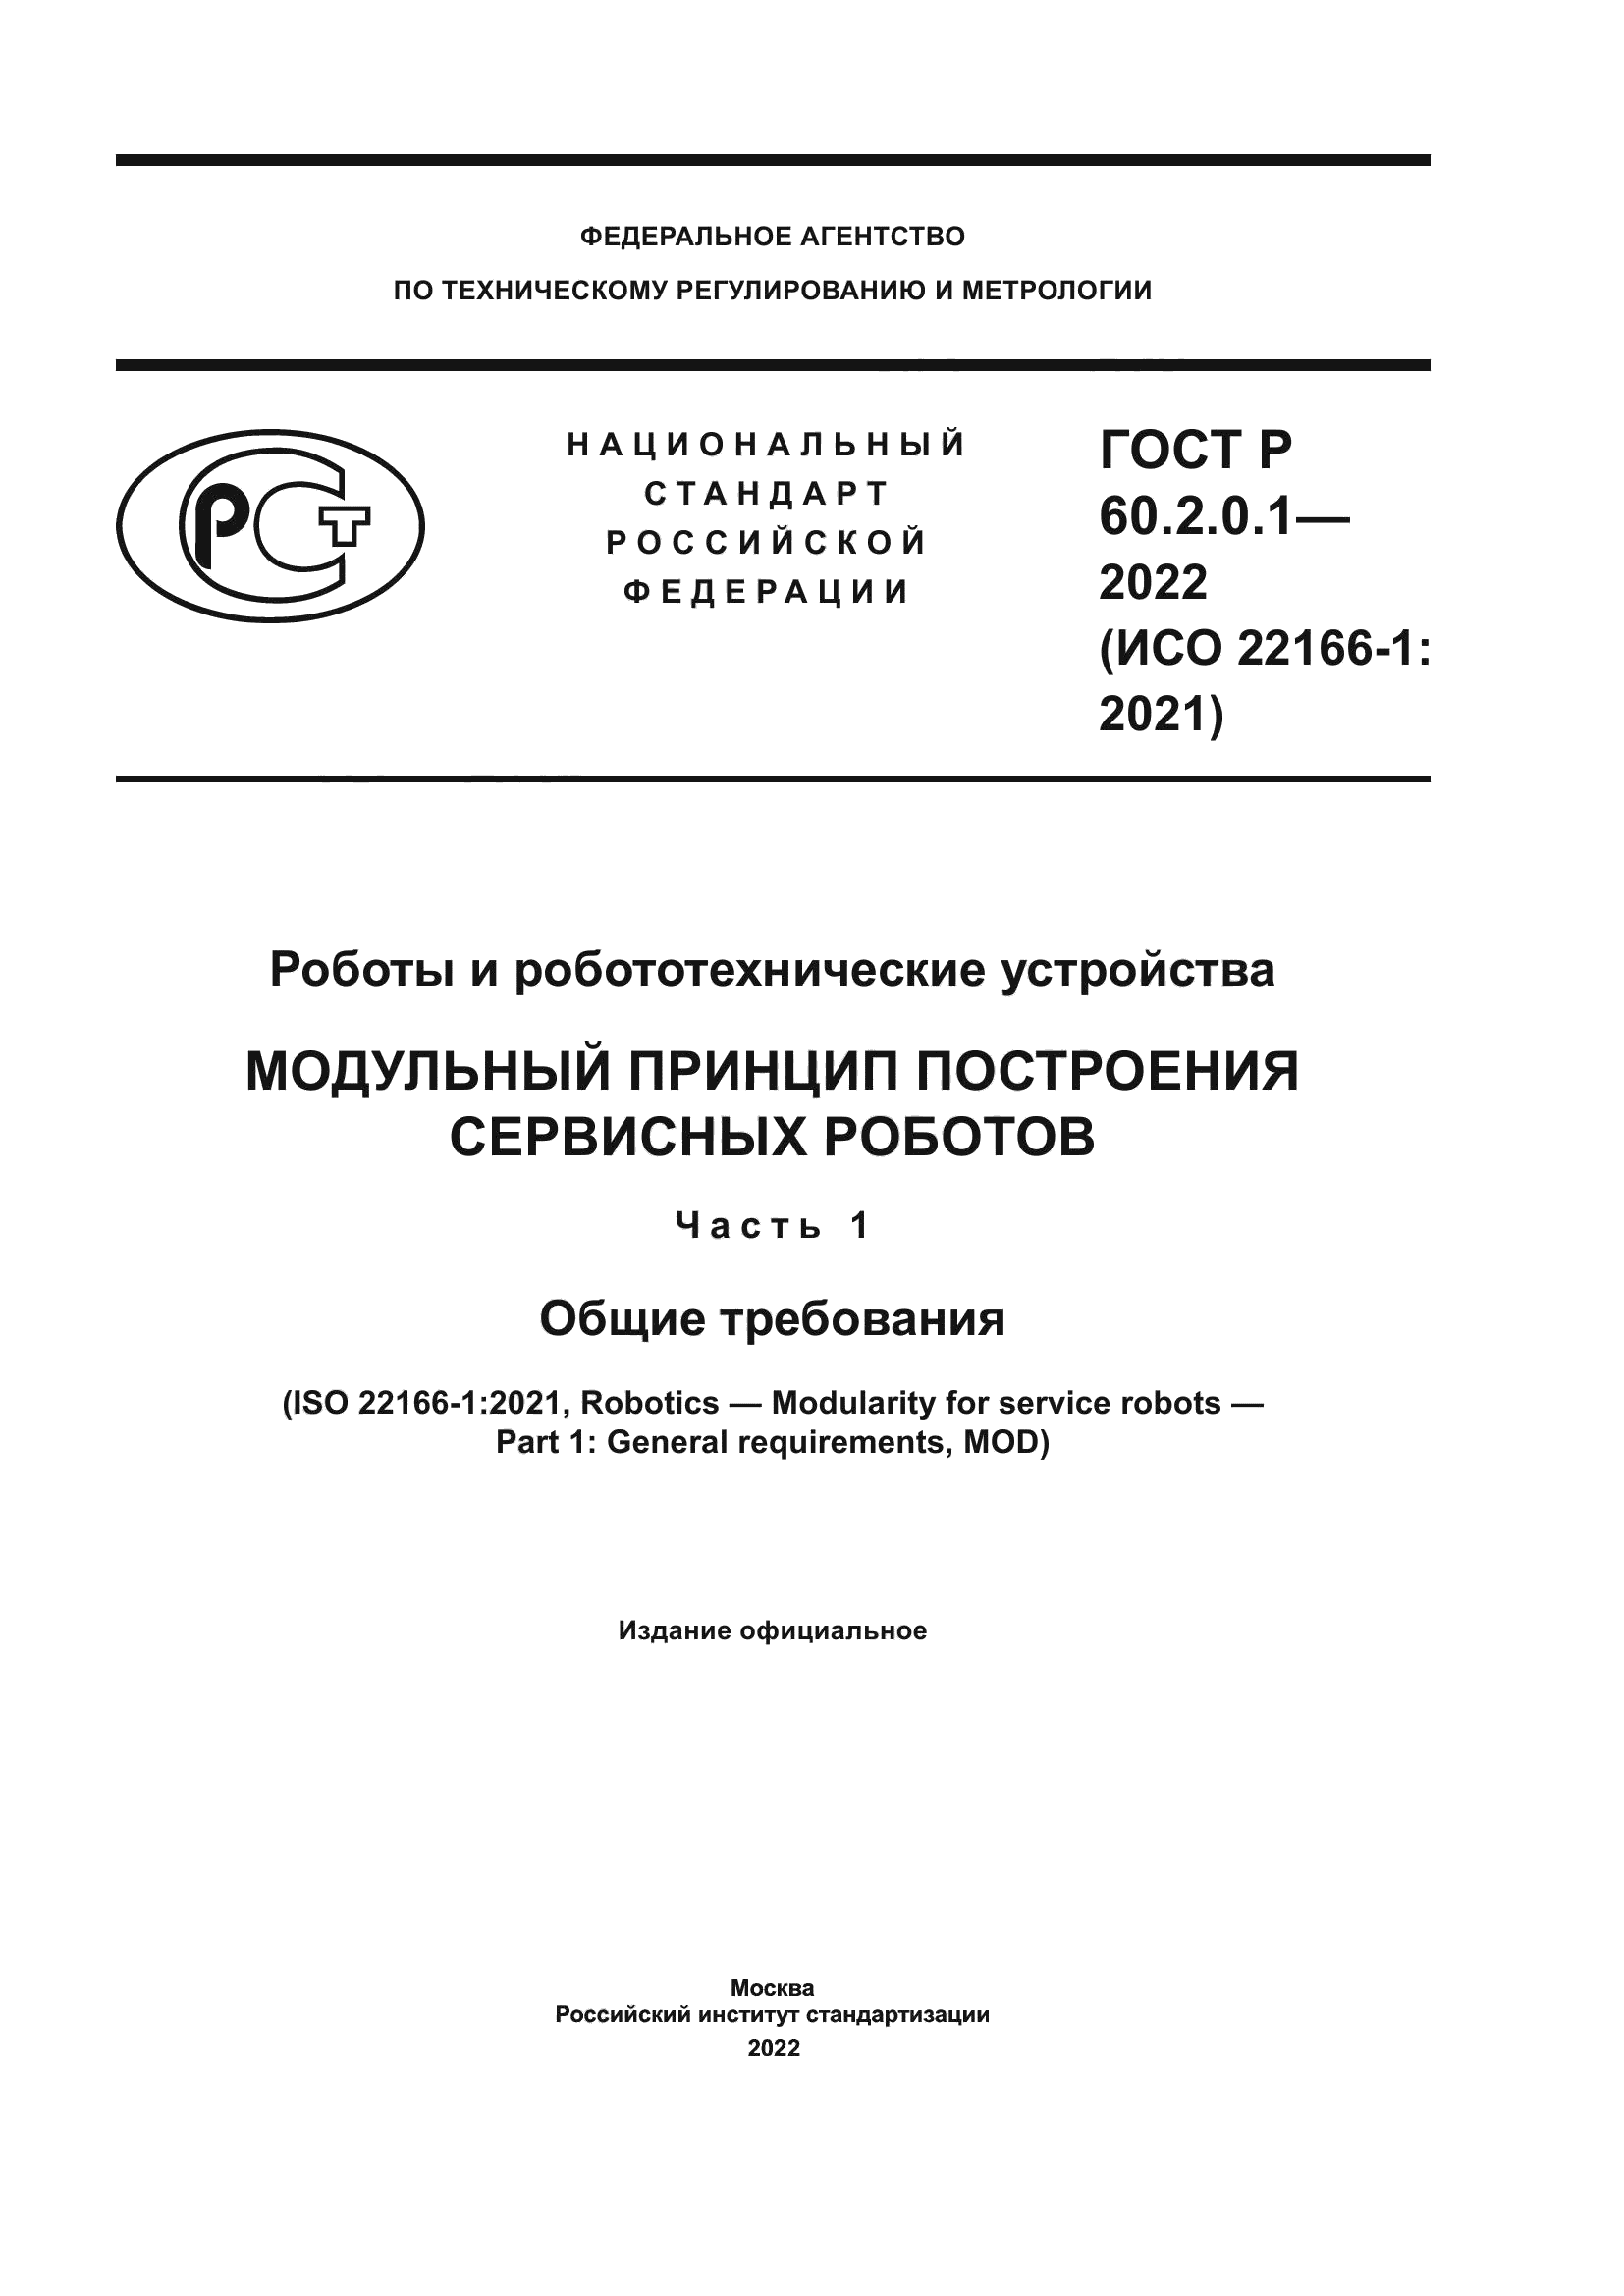 ГОСТ Р 60.2.0.1-2022